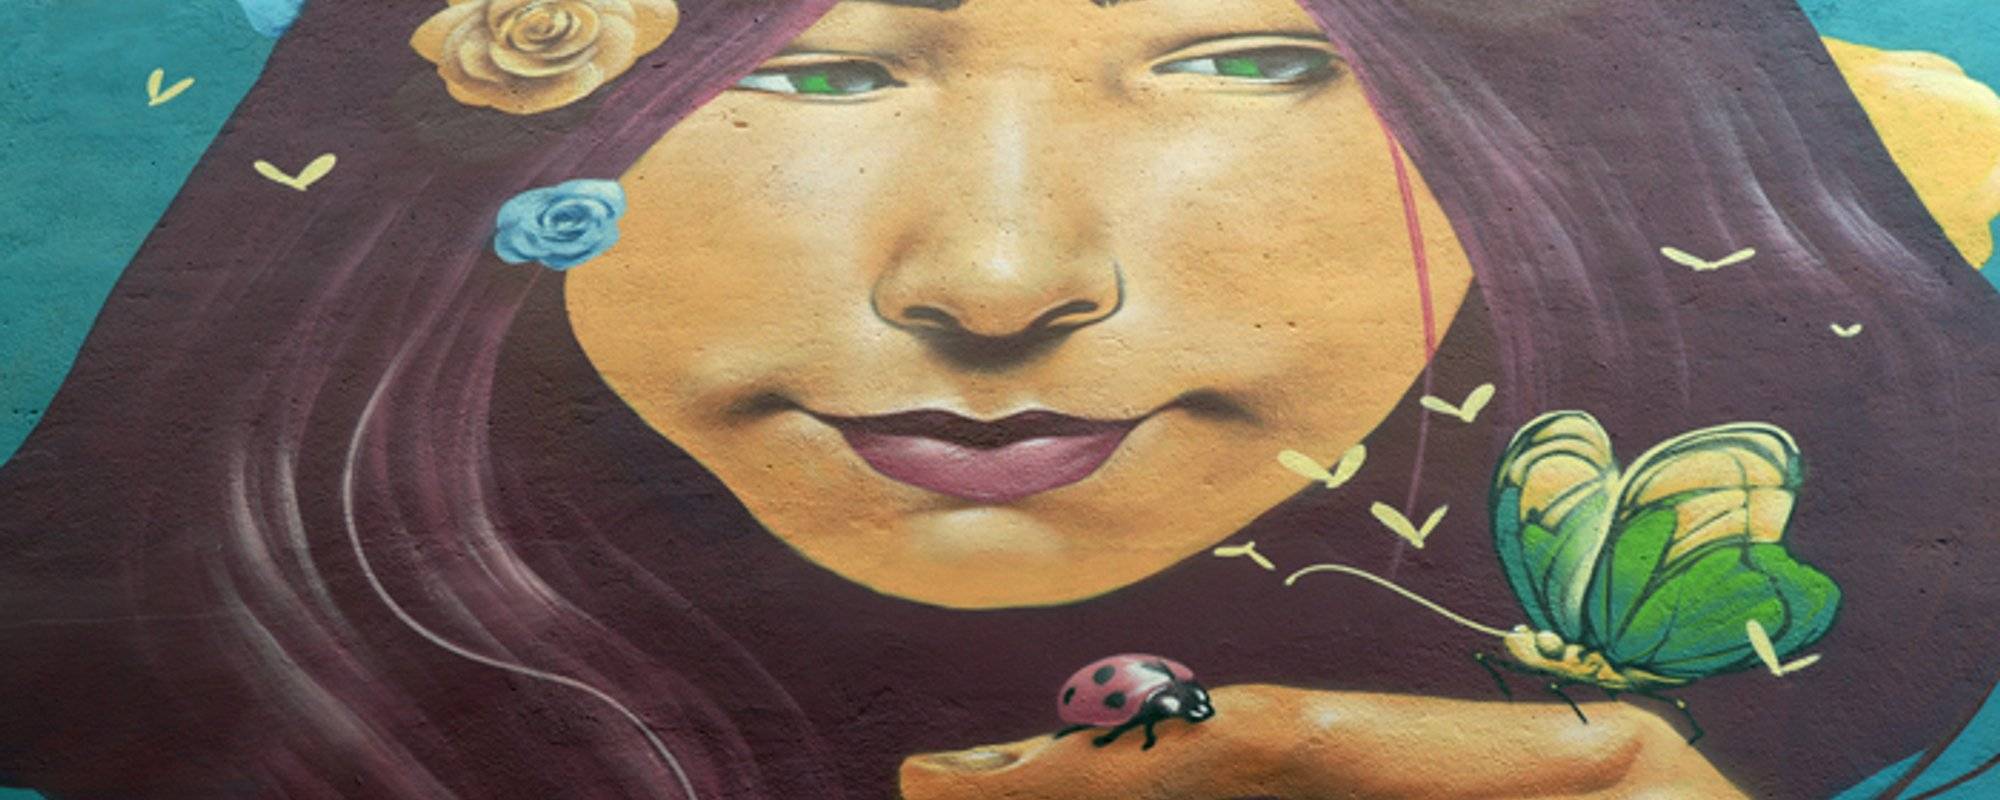 STREET ART #40 – Kristiansand (Norway) has finally got a place on the world street art map